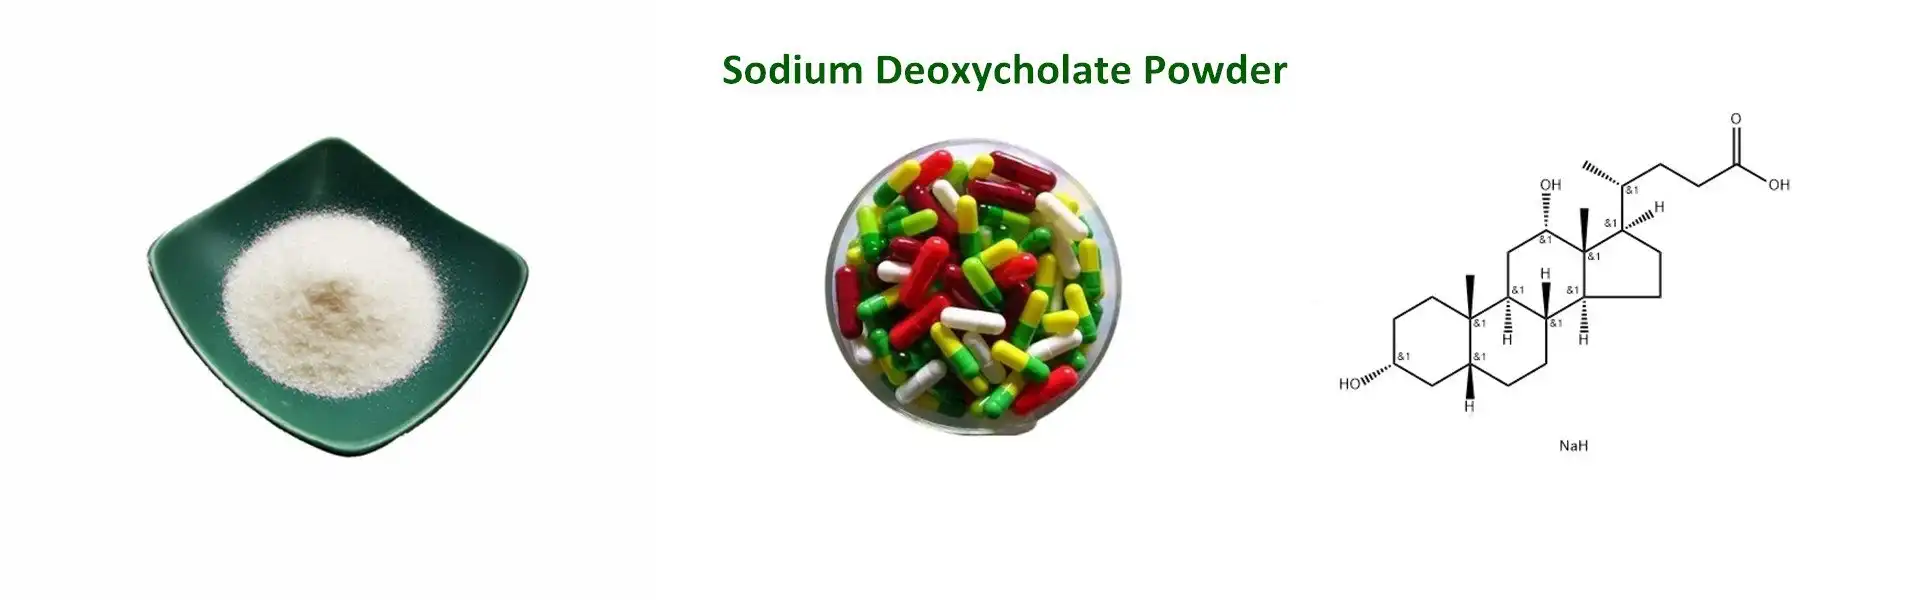 Sodium Deoxycholate Powder